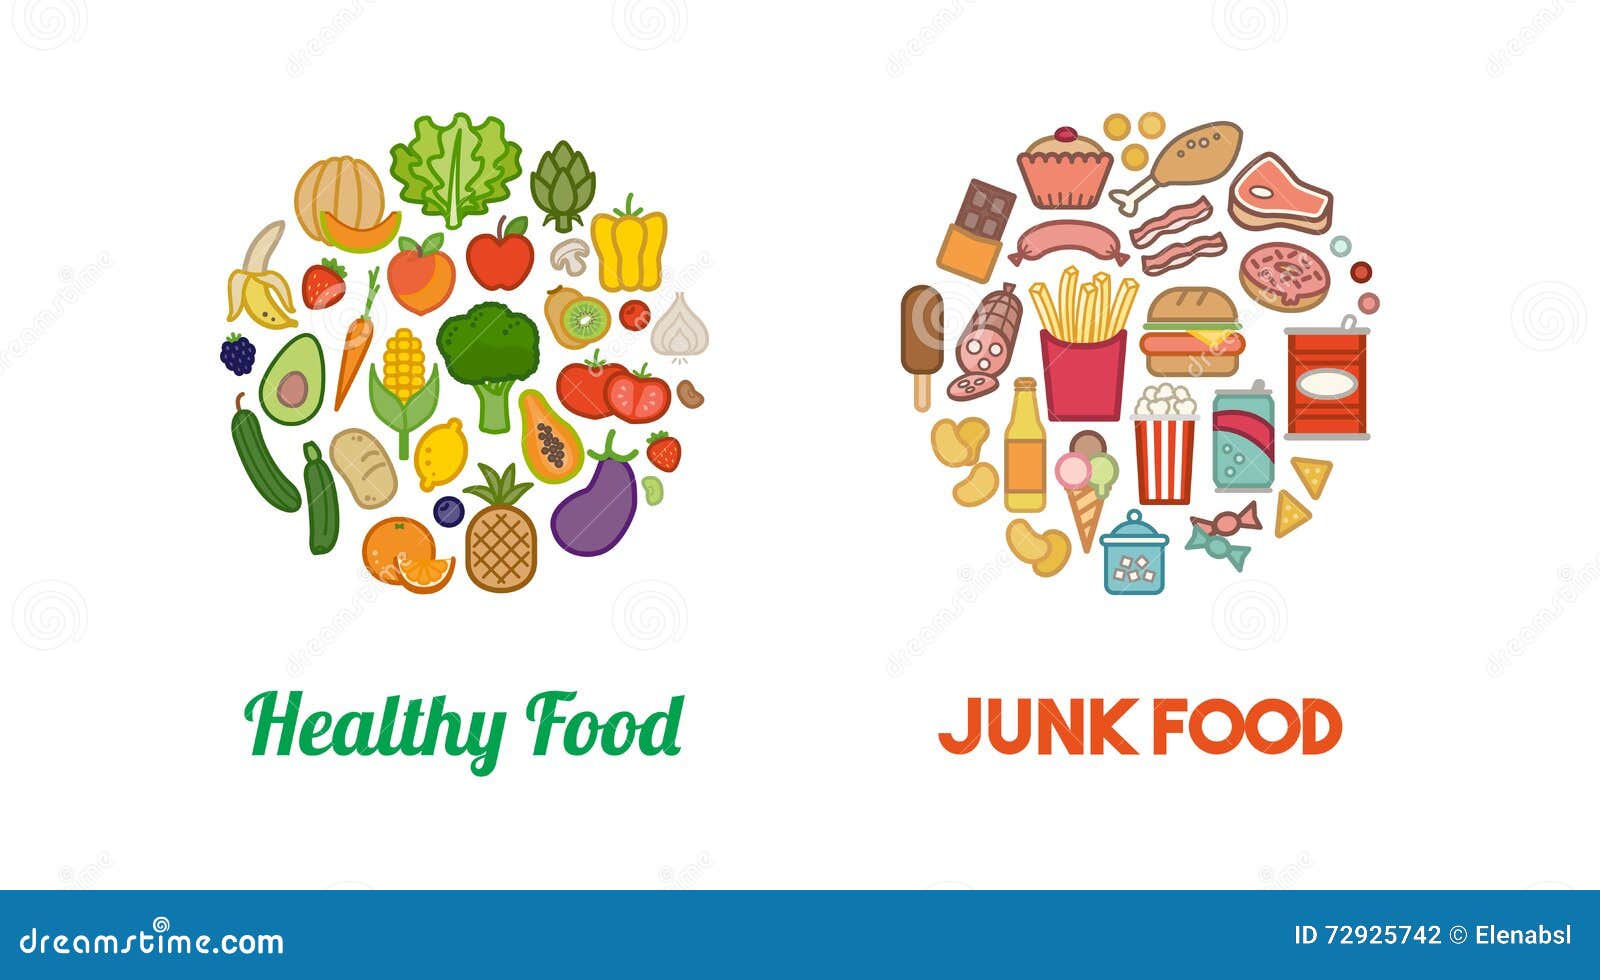 healthy vegetables and junk food